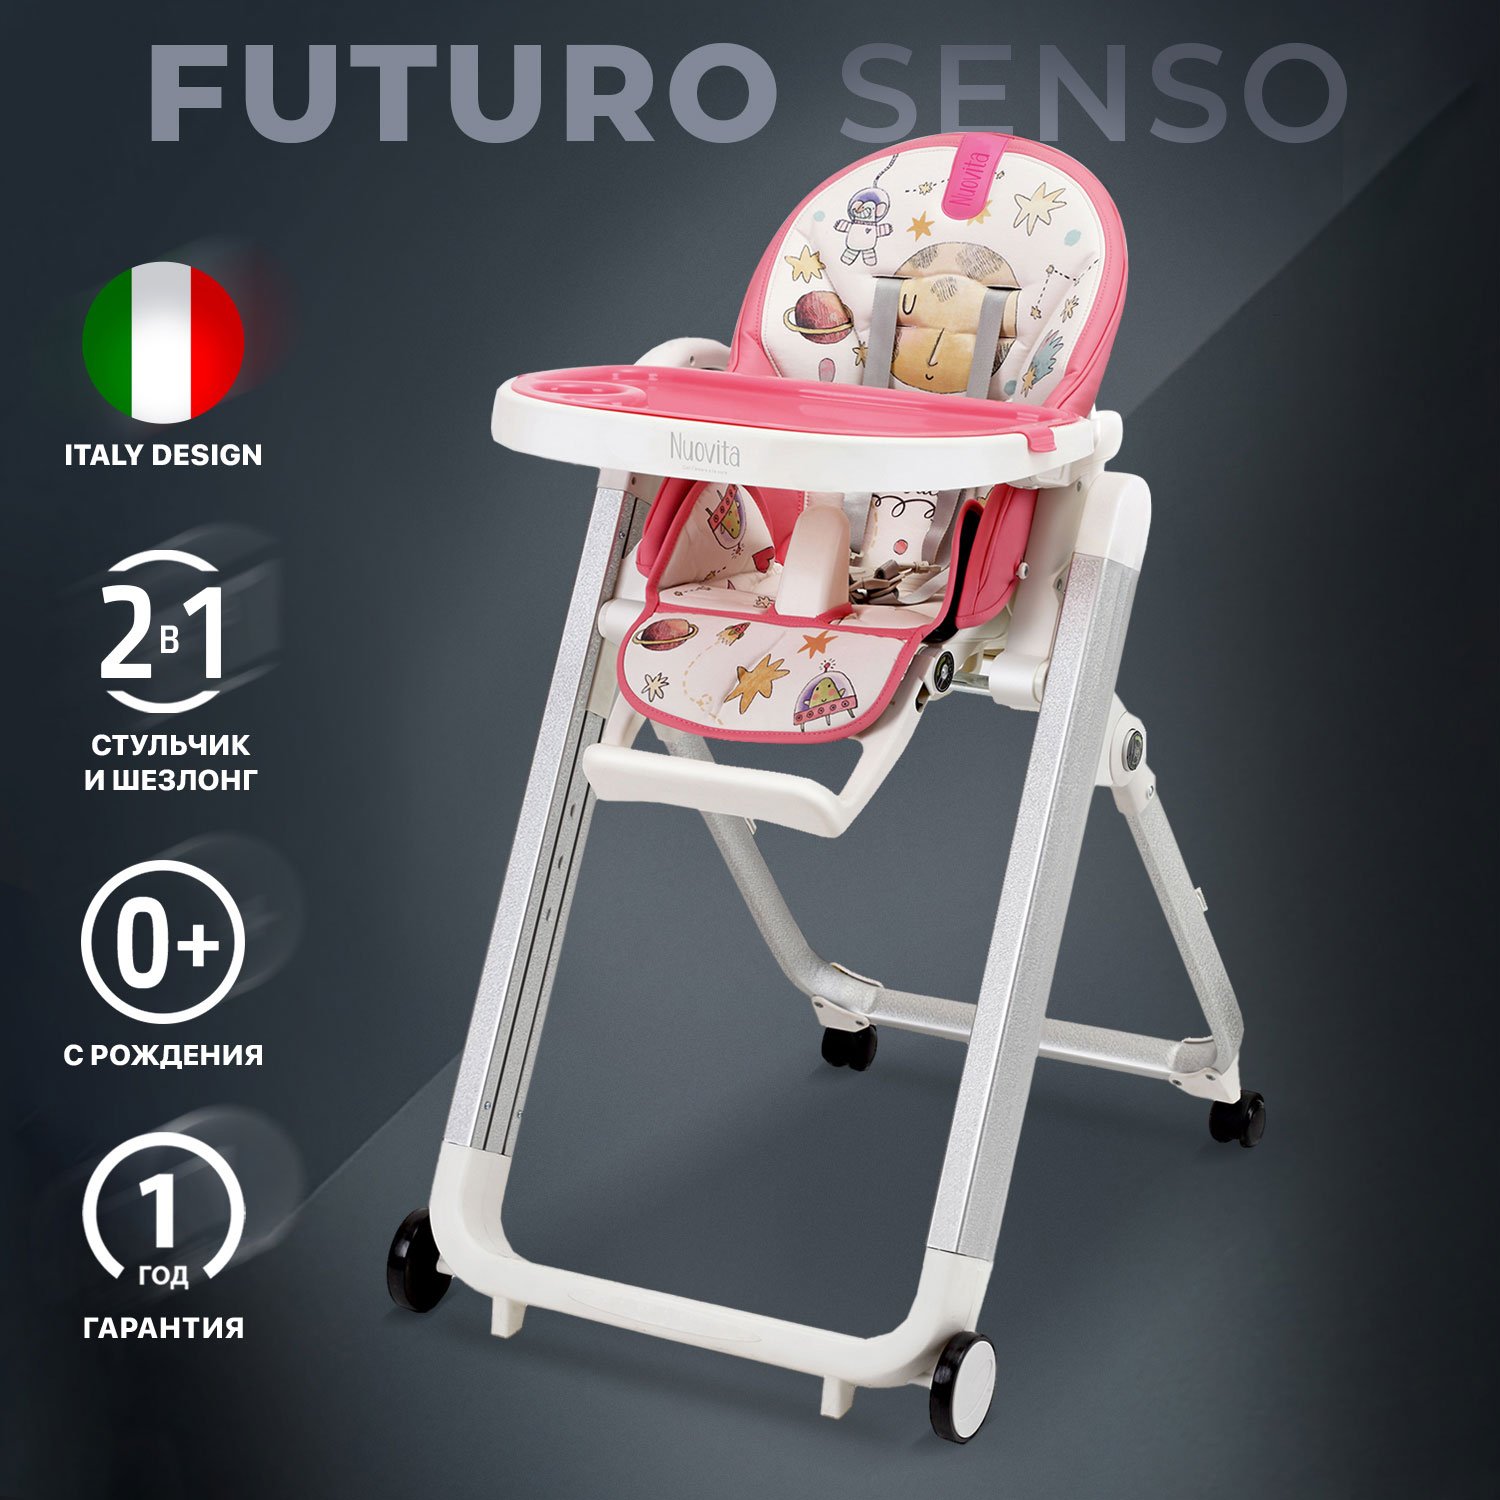 Стульчик для кормления Nuovita Futuro Senso Bianco (Cosmo rosa/Розовый космос) стульчик для кормления nuovita futuro nero cosmo giallo желтый космос